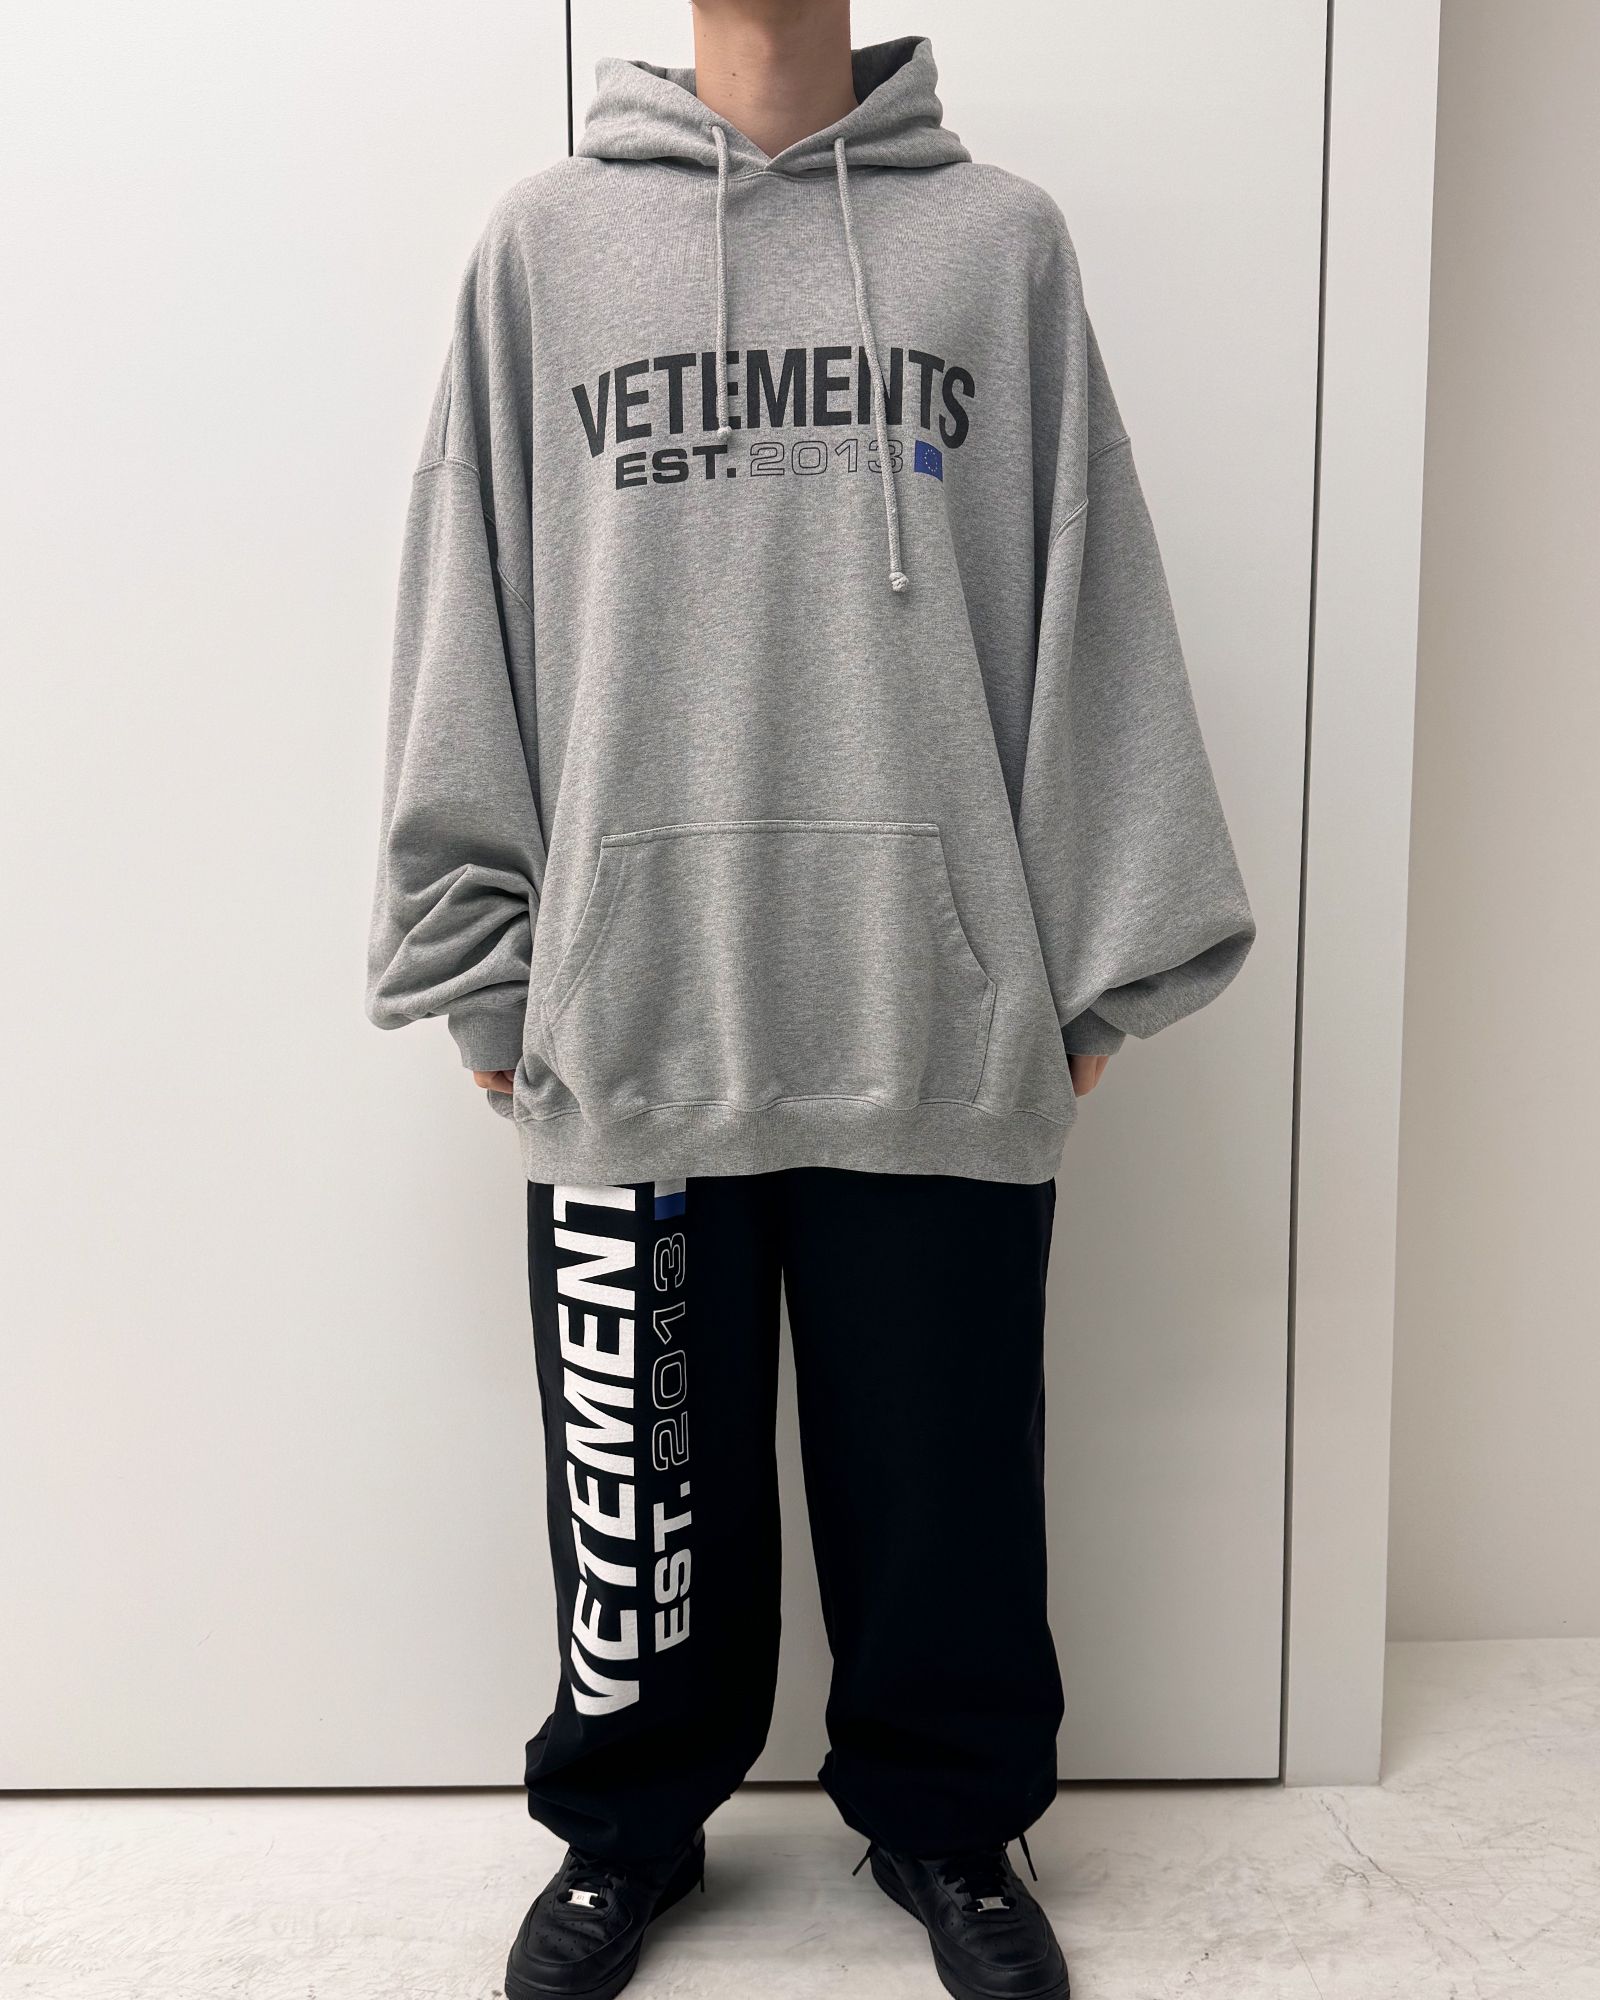 VETEMENTS - ヴェトモン/Limited edition crystal logo hoodie/プル 